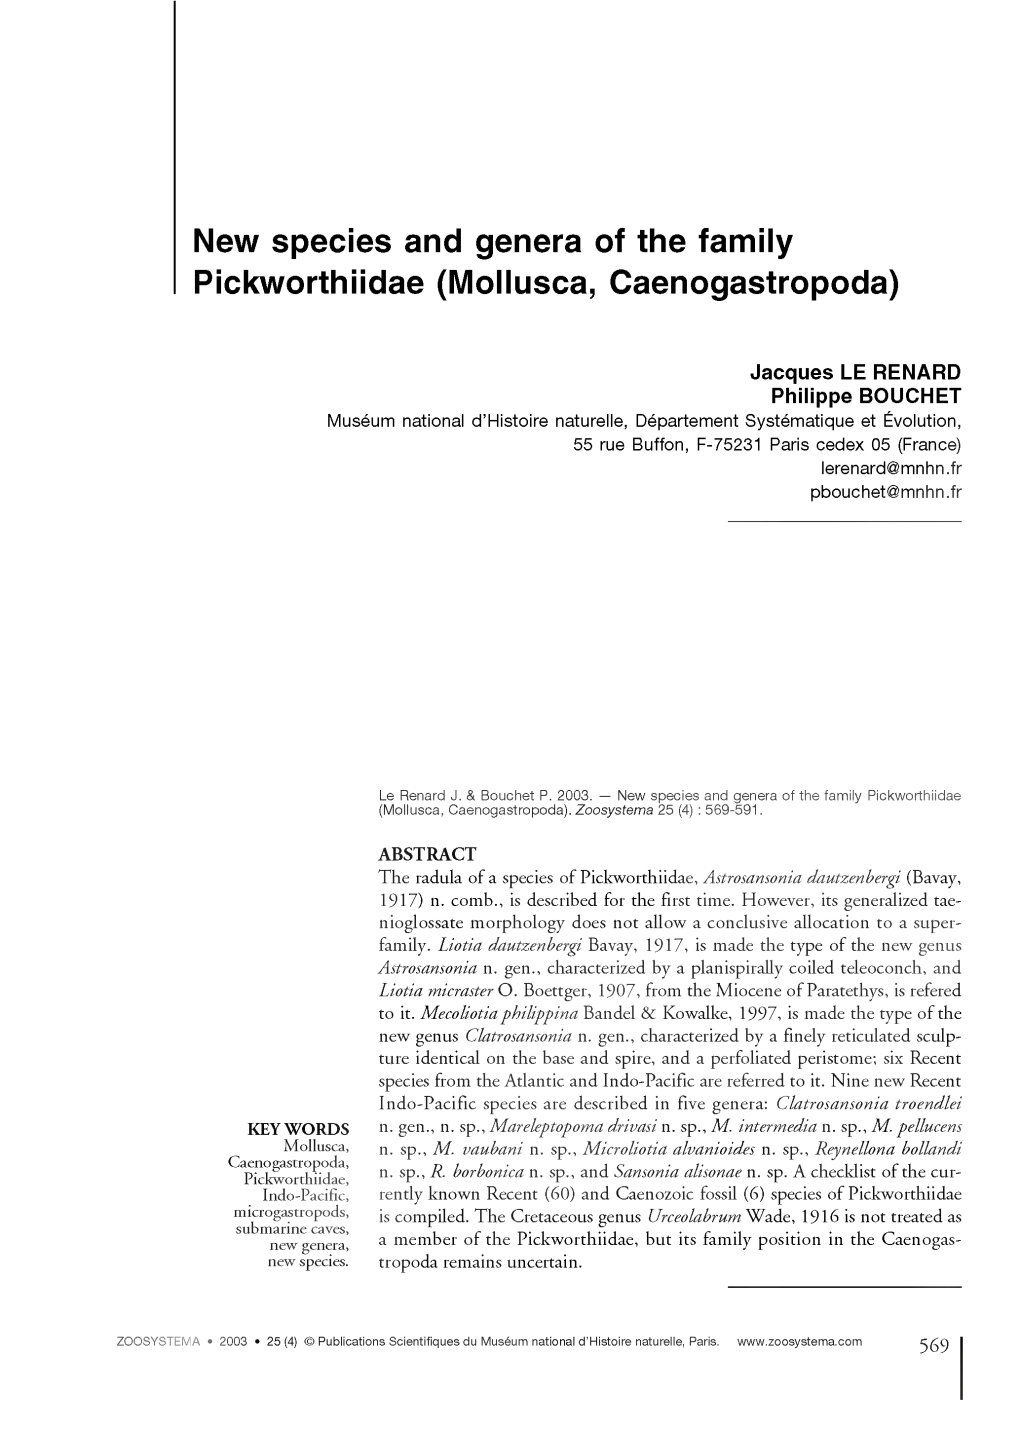 New Species and Genera of the Family Pickworthiidae (Mollusca, Caenogastropoda)